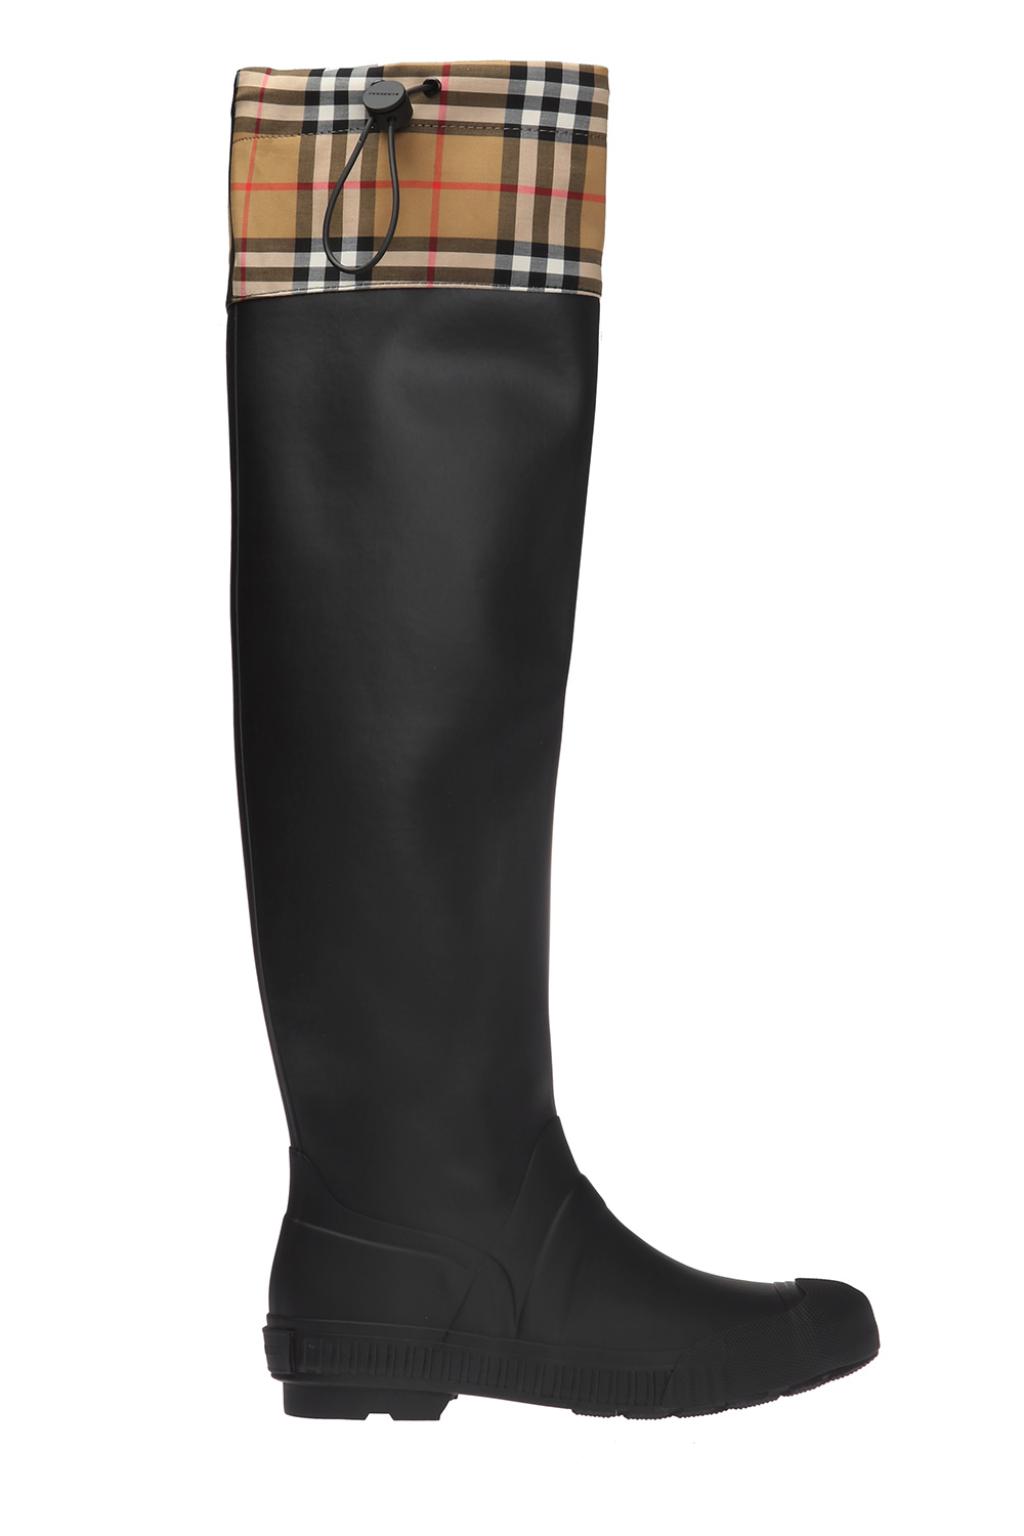 burberry rain boots canada